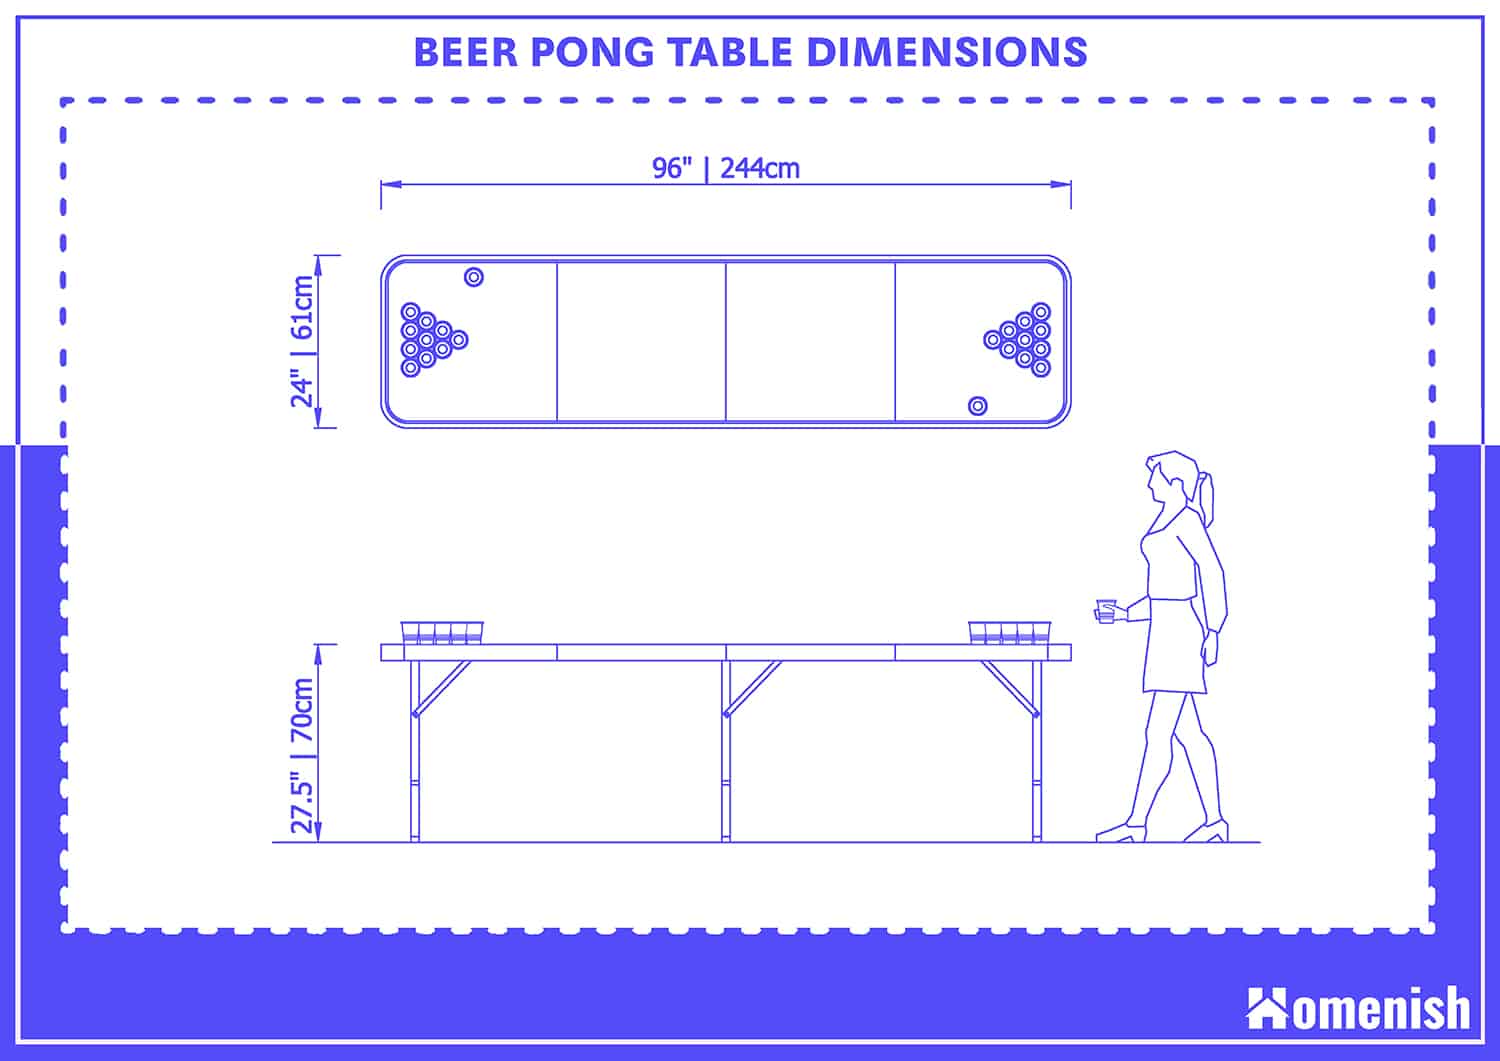 Standard Beer Pong Table Dimensions